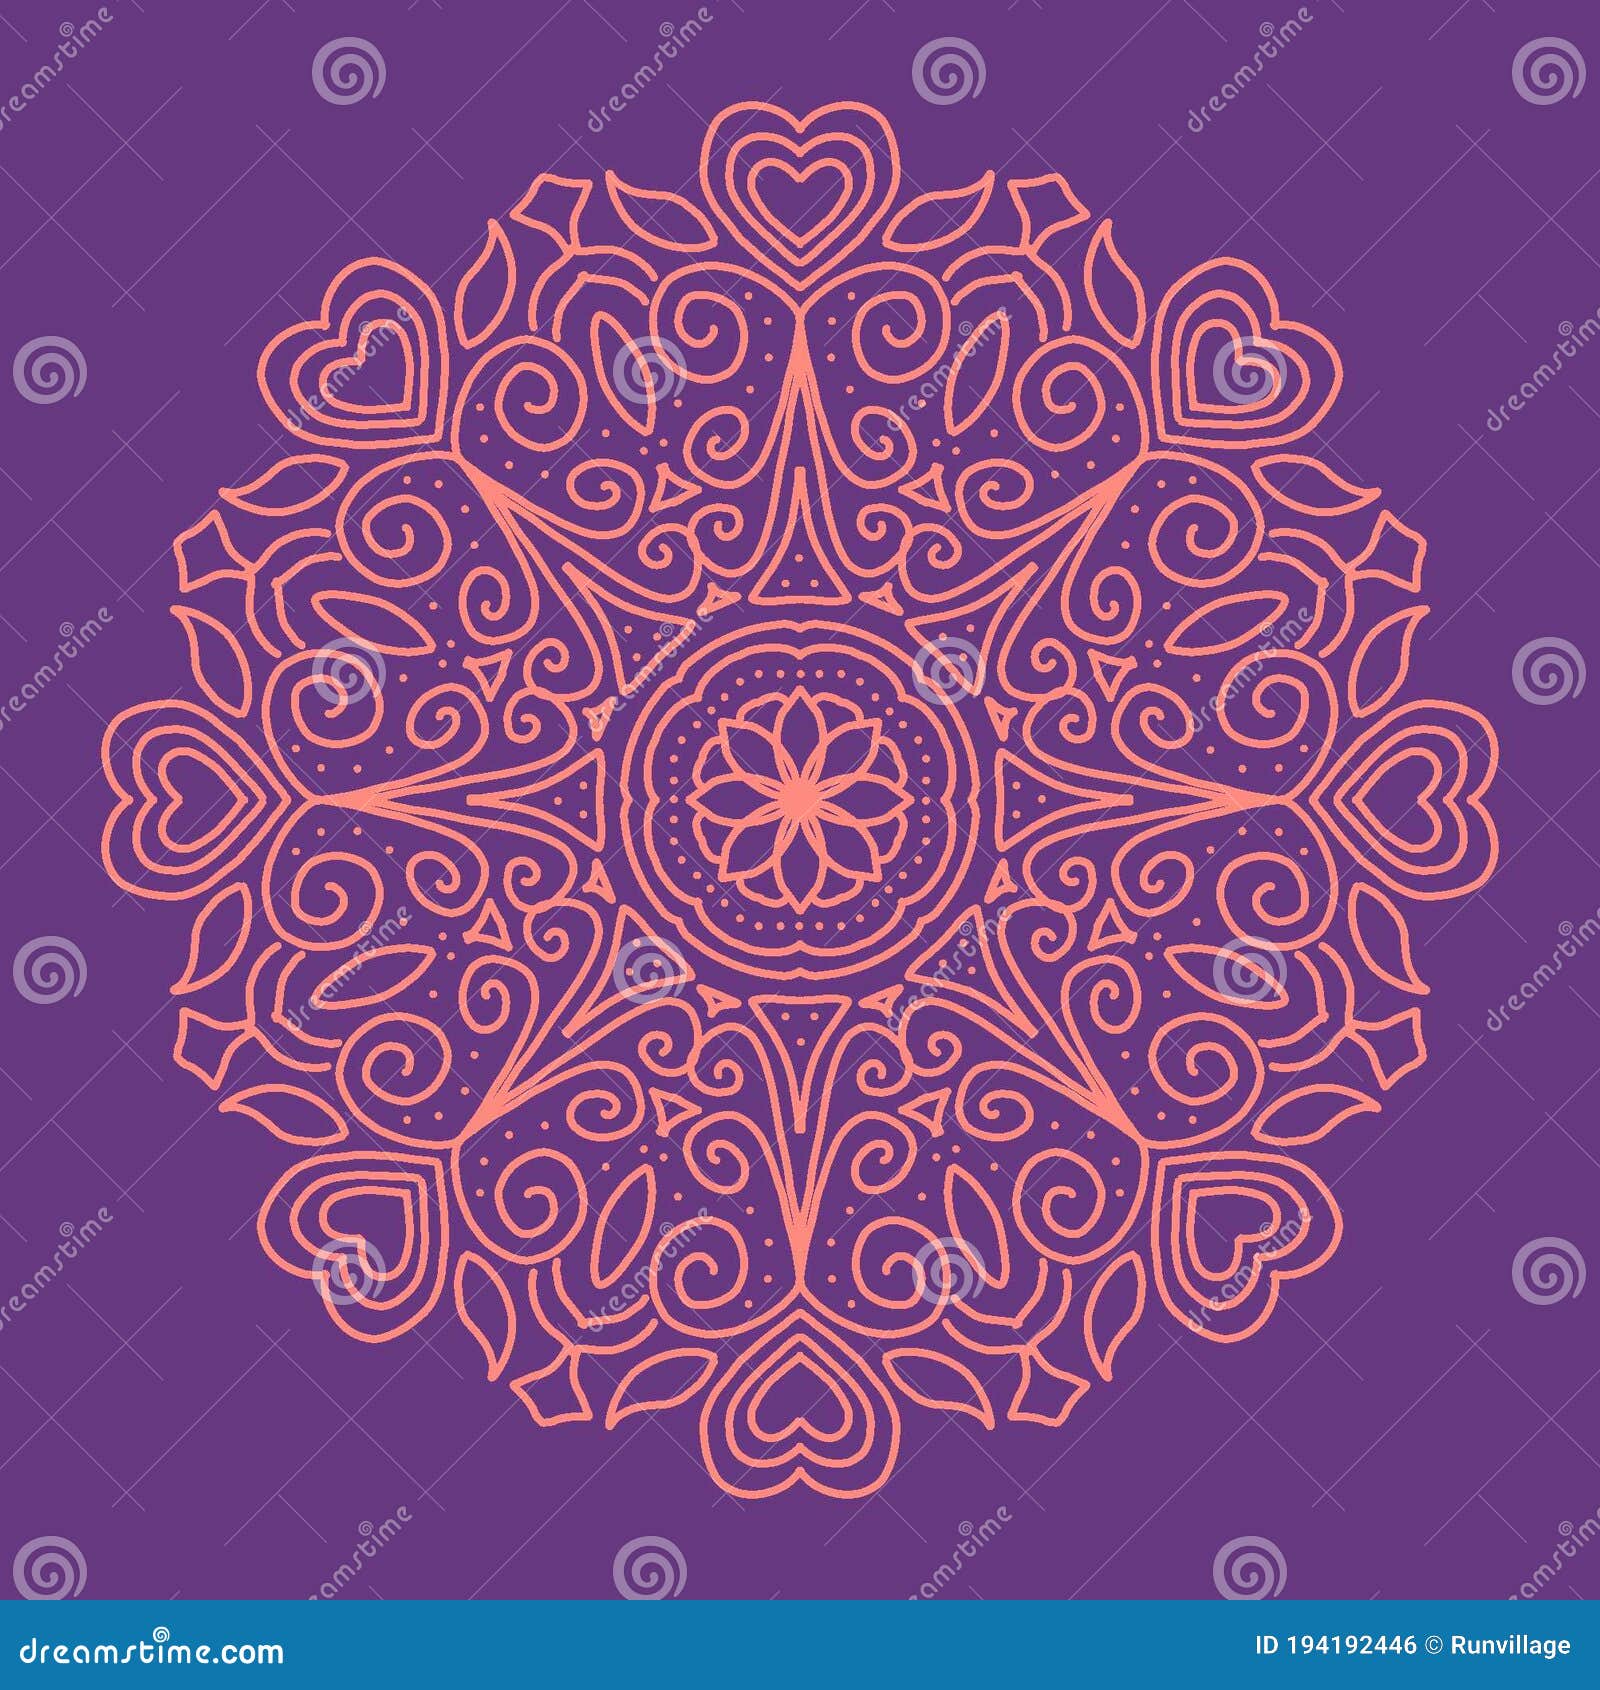 Mandala Colorful Vintage Art, Ancient Indian Vedic Background Design ...